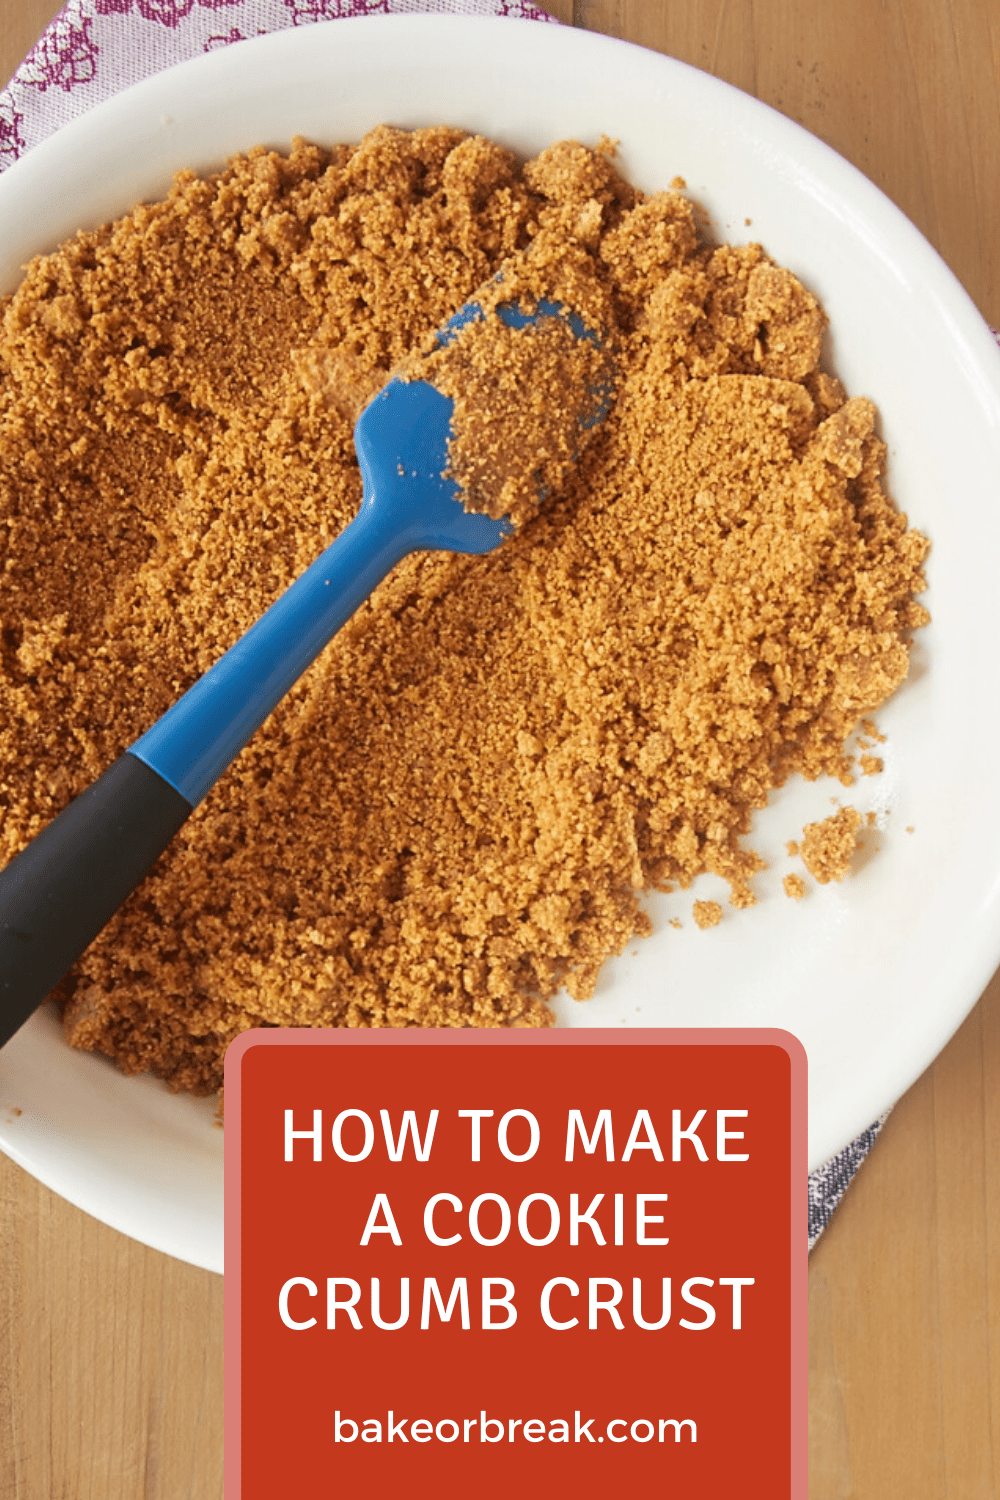 How to Make a Cookie Crumb Crust bakeorbreak.com